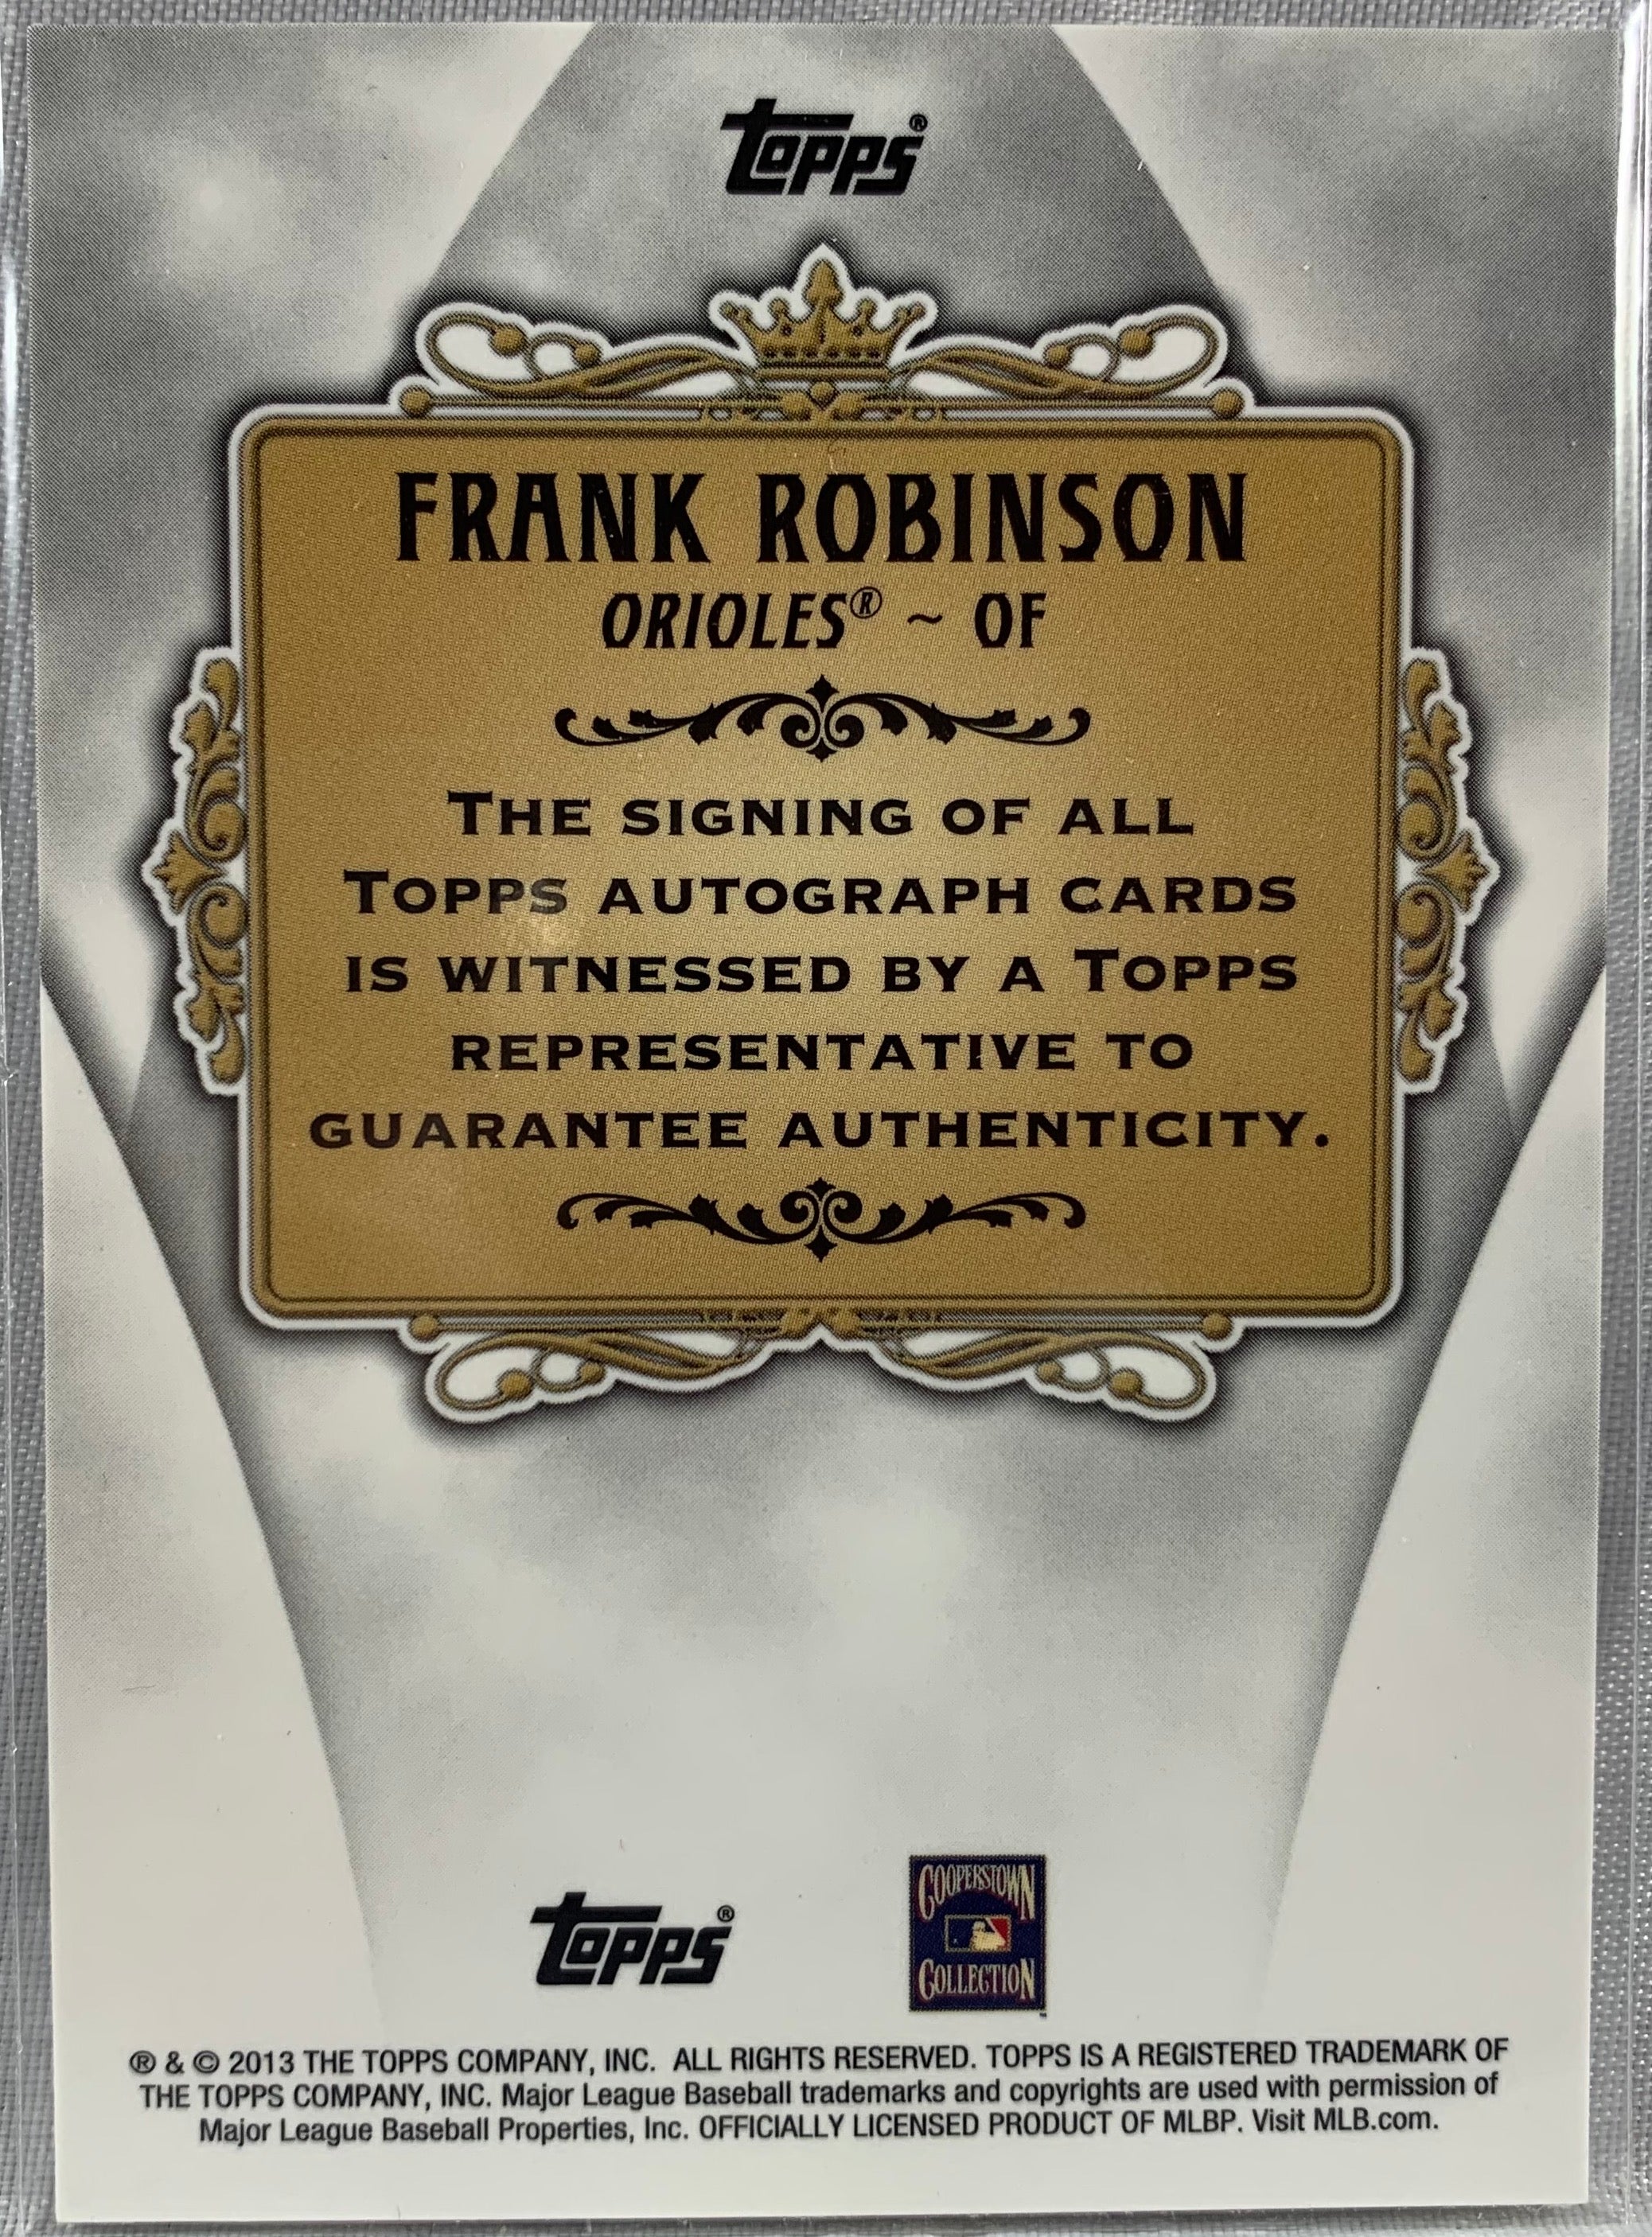 Frank Robinson Signed Baltimore Orioles Jersey. Baseball